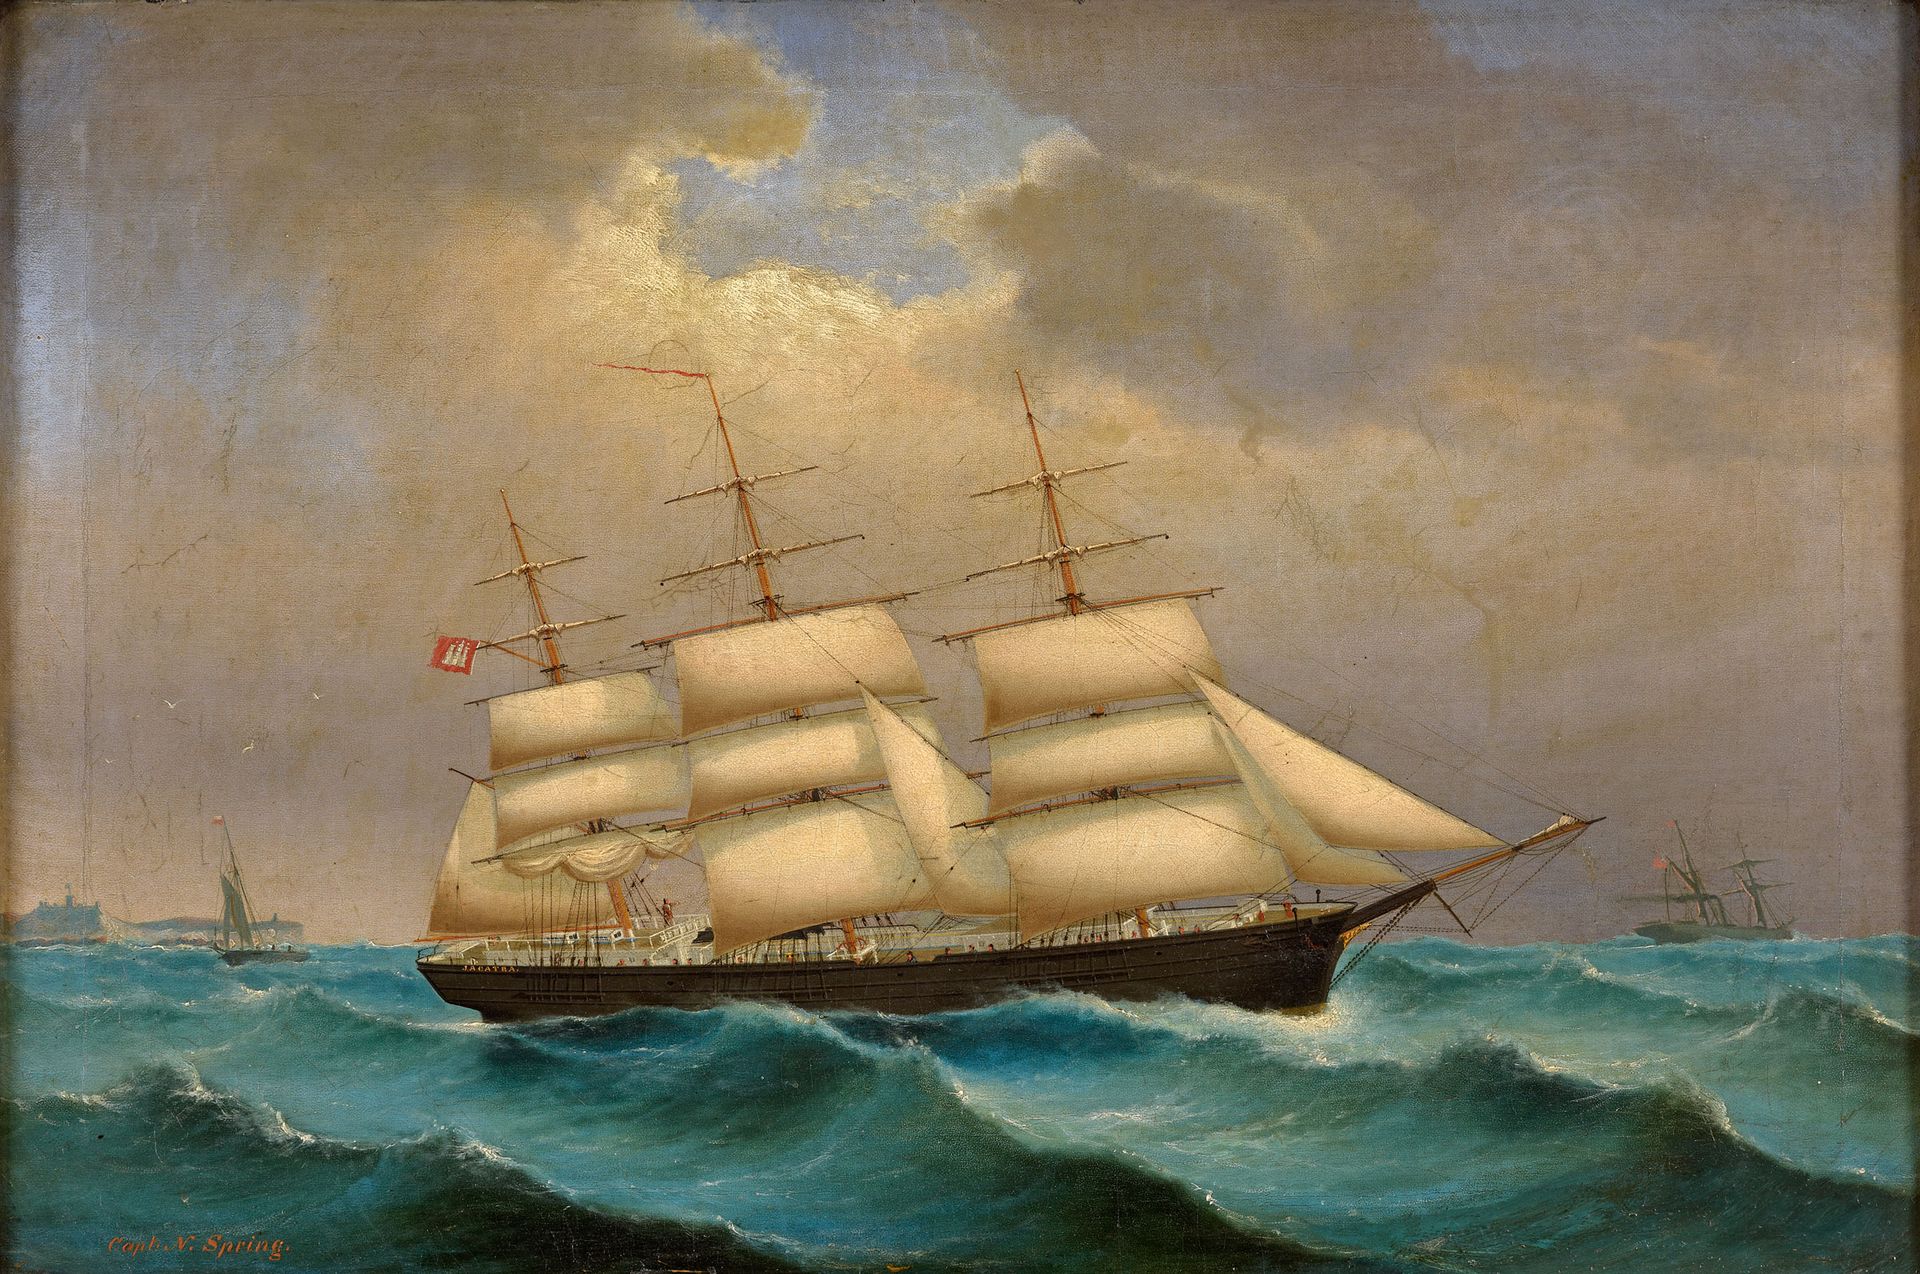 Kapitänsbild 船长的画作19世纪。
The Jacatra, Captain N. Spring.
题目是。油/白，53 x 79厘米。